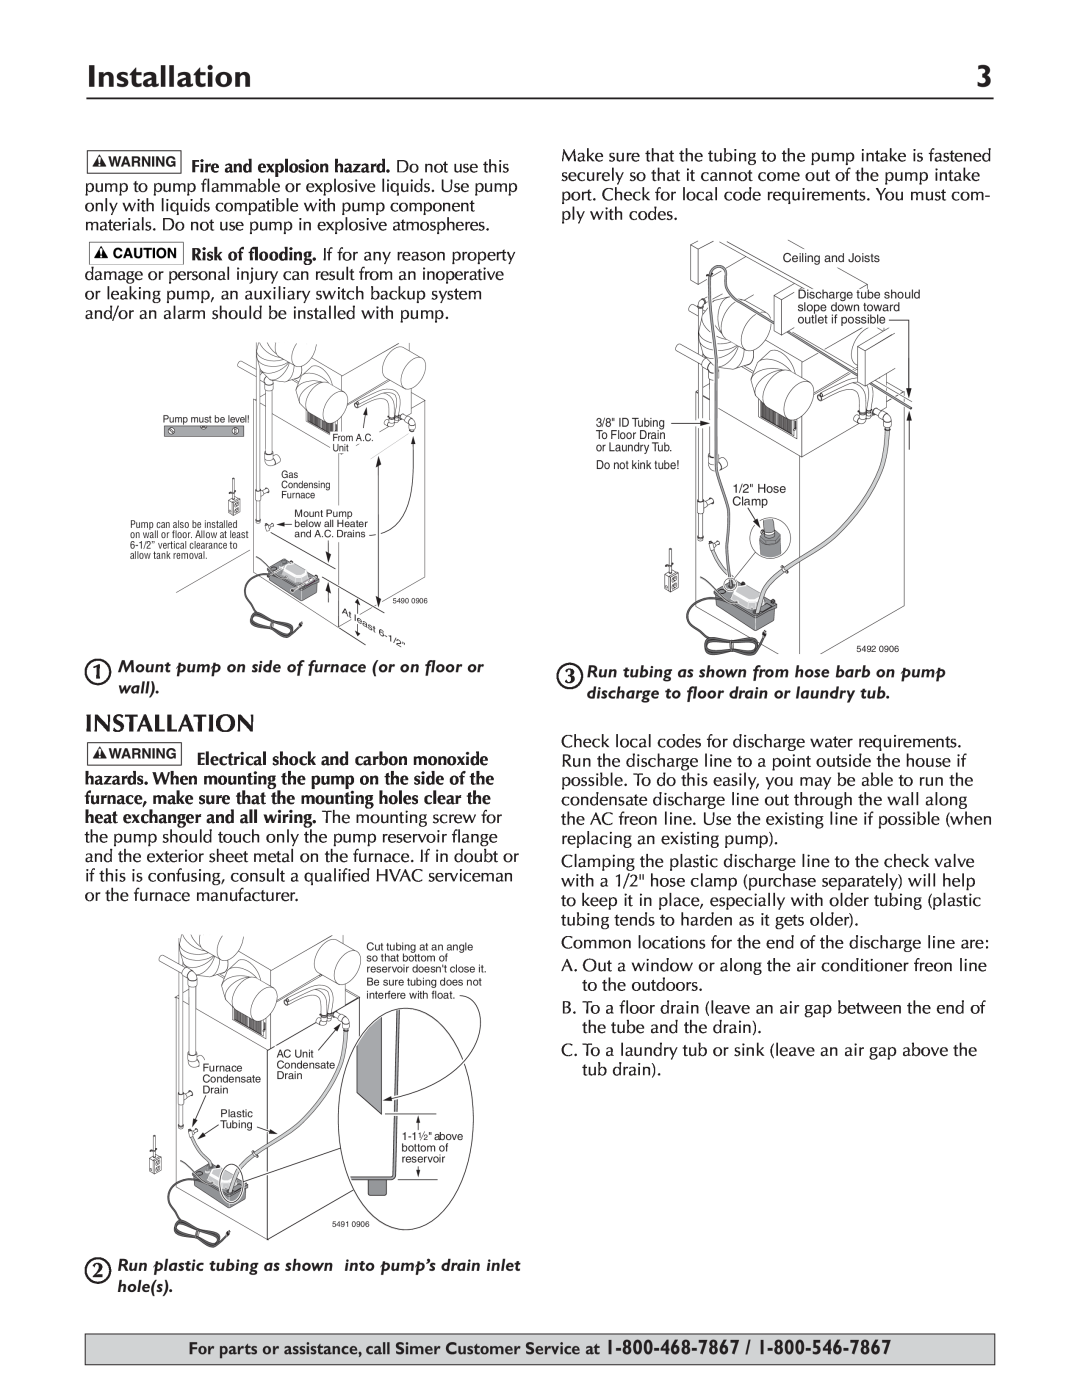 Simer Pumps 2520ULST owner manual Installation 